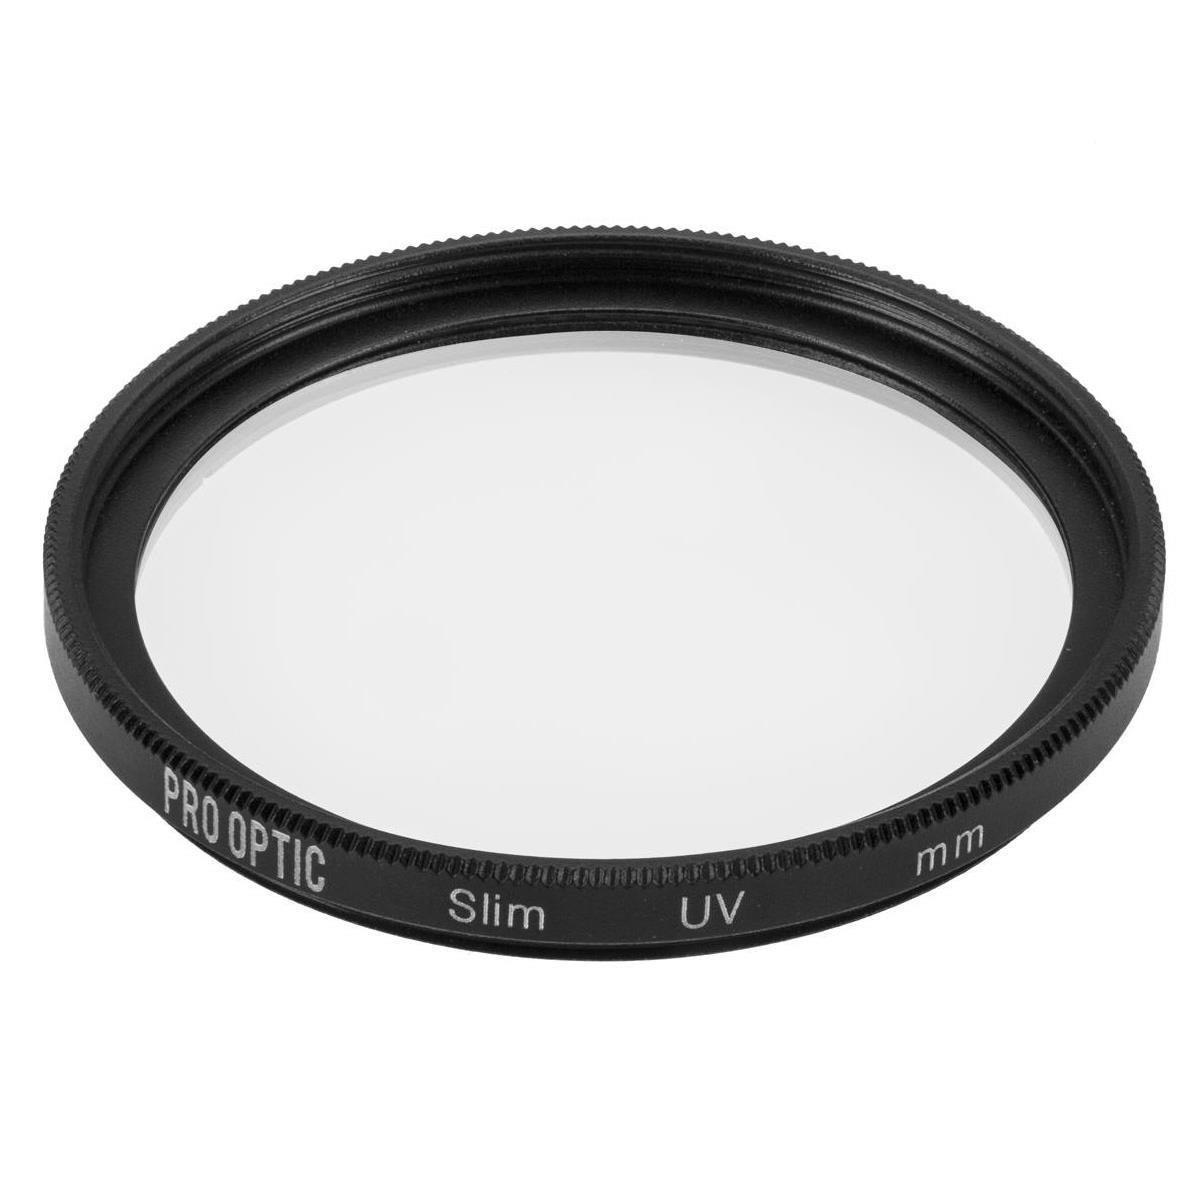 ProOPTIC Pro Digital 86mm Multi Coated UV Slim Filter цена и фото